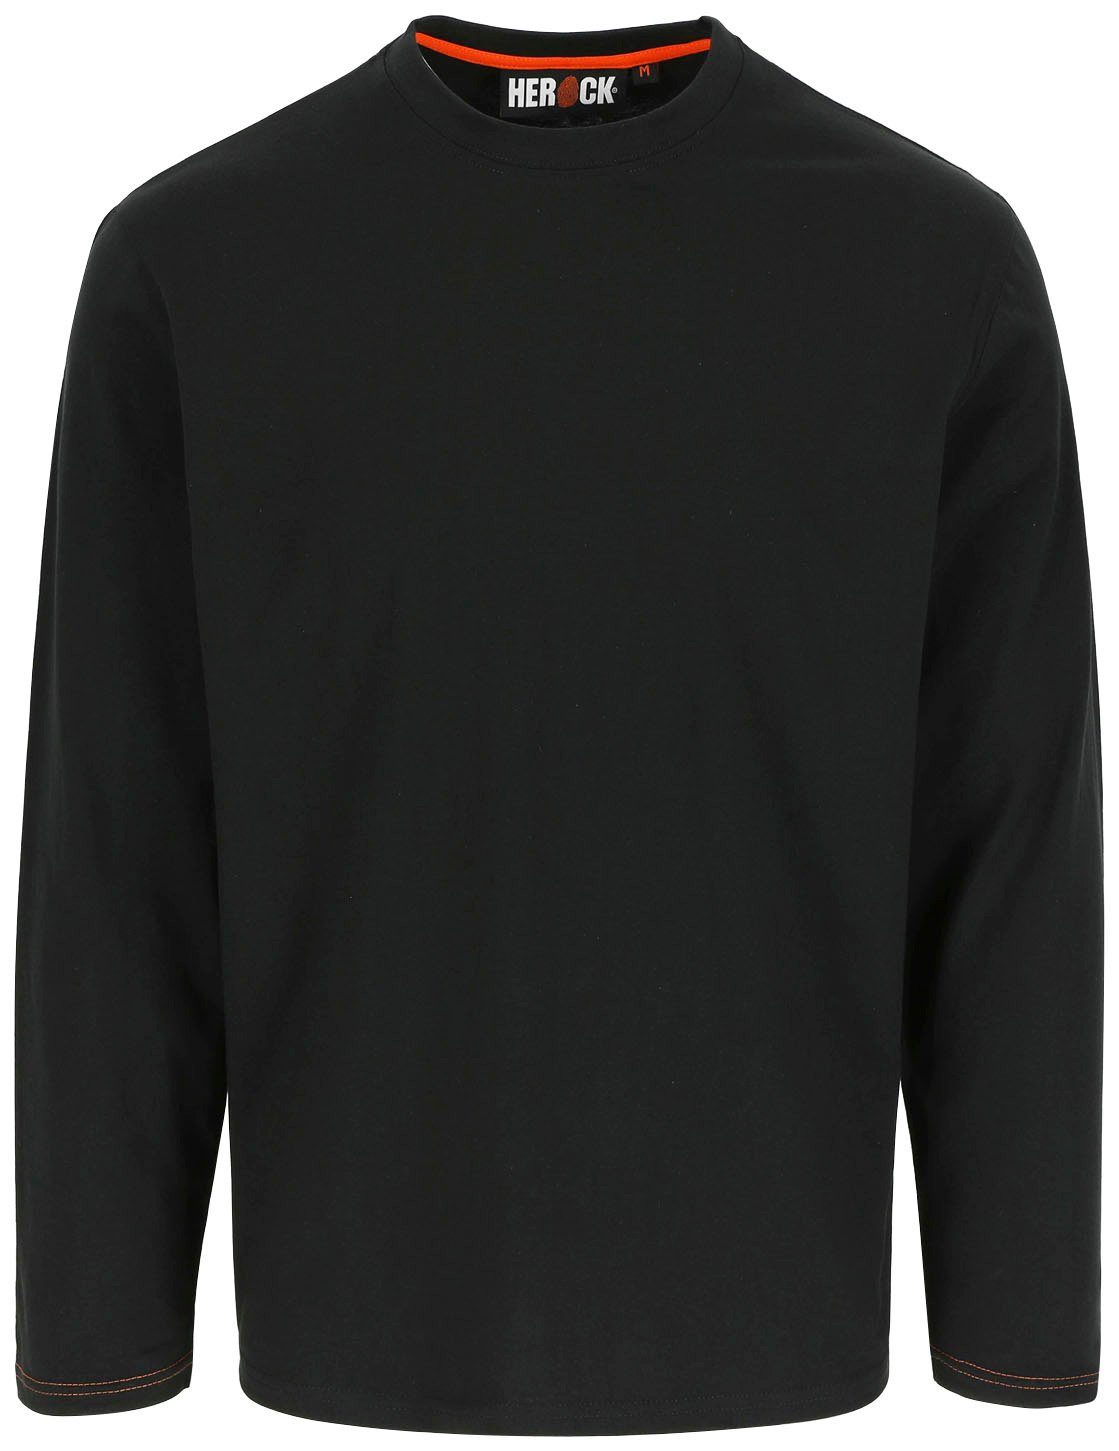 Herock Langarmshirt Noet t-shirt langärmlig 100 % vorgeschrumpfte Baumwolle, angenehmes Tragegefühl, Basic schwarz | Shirts